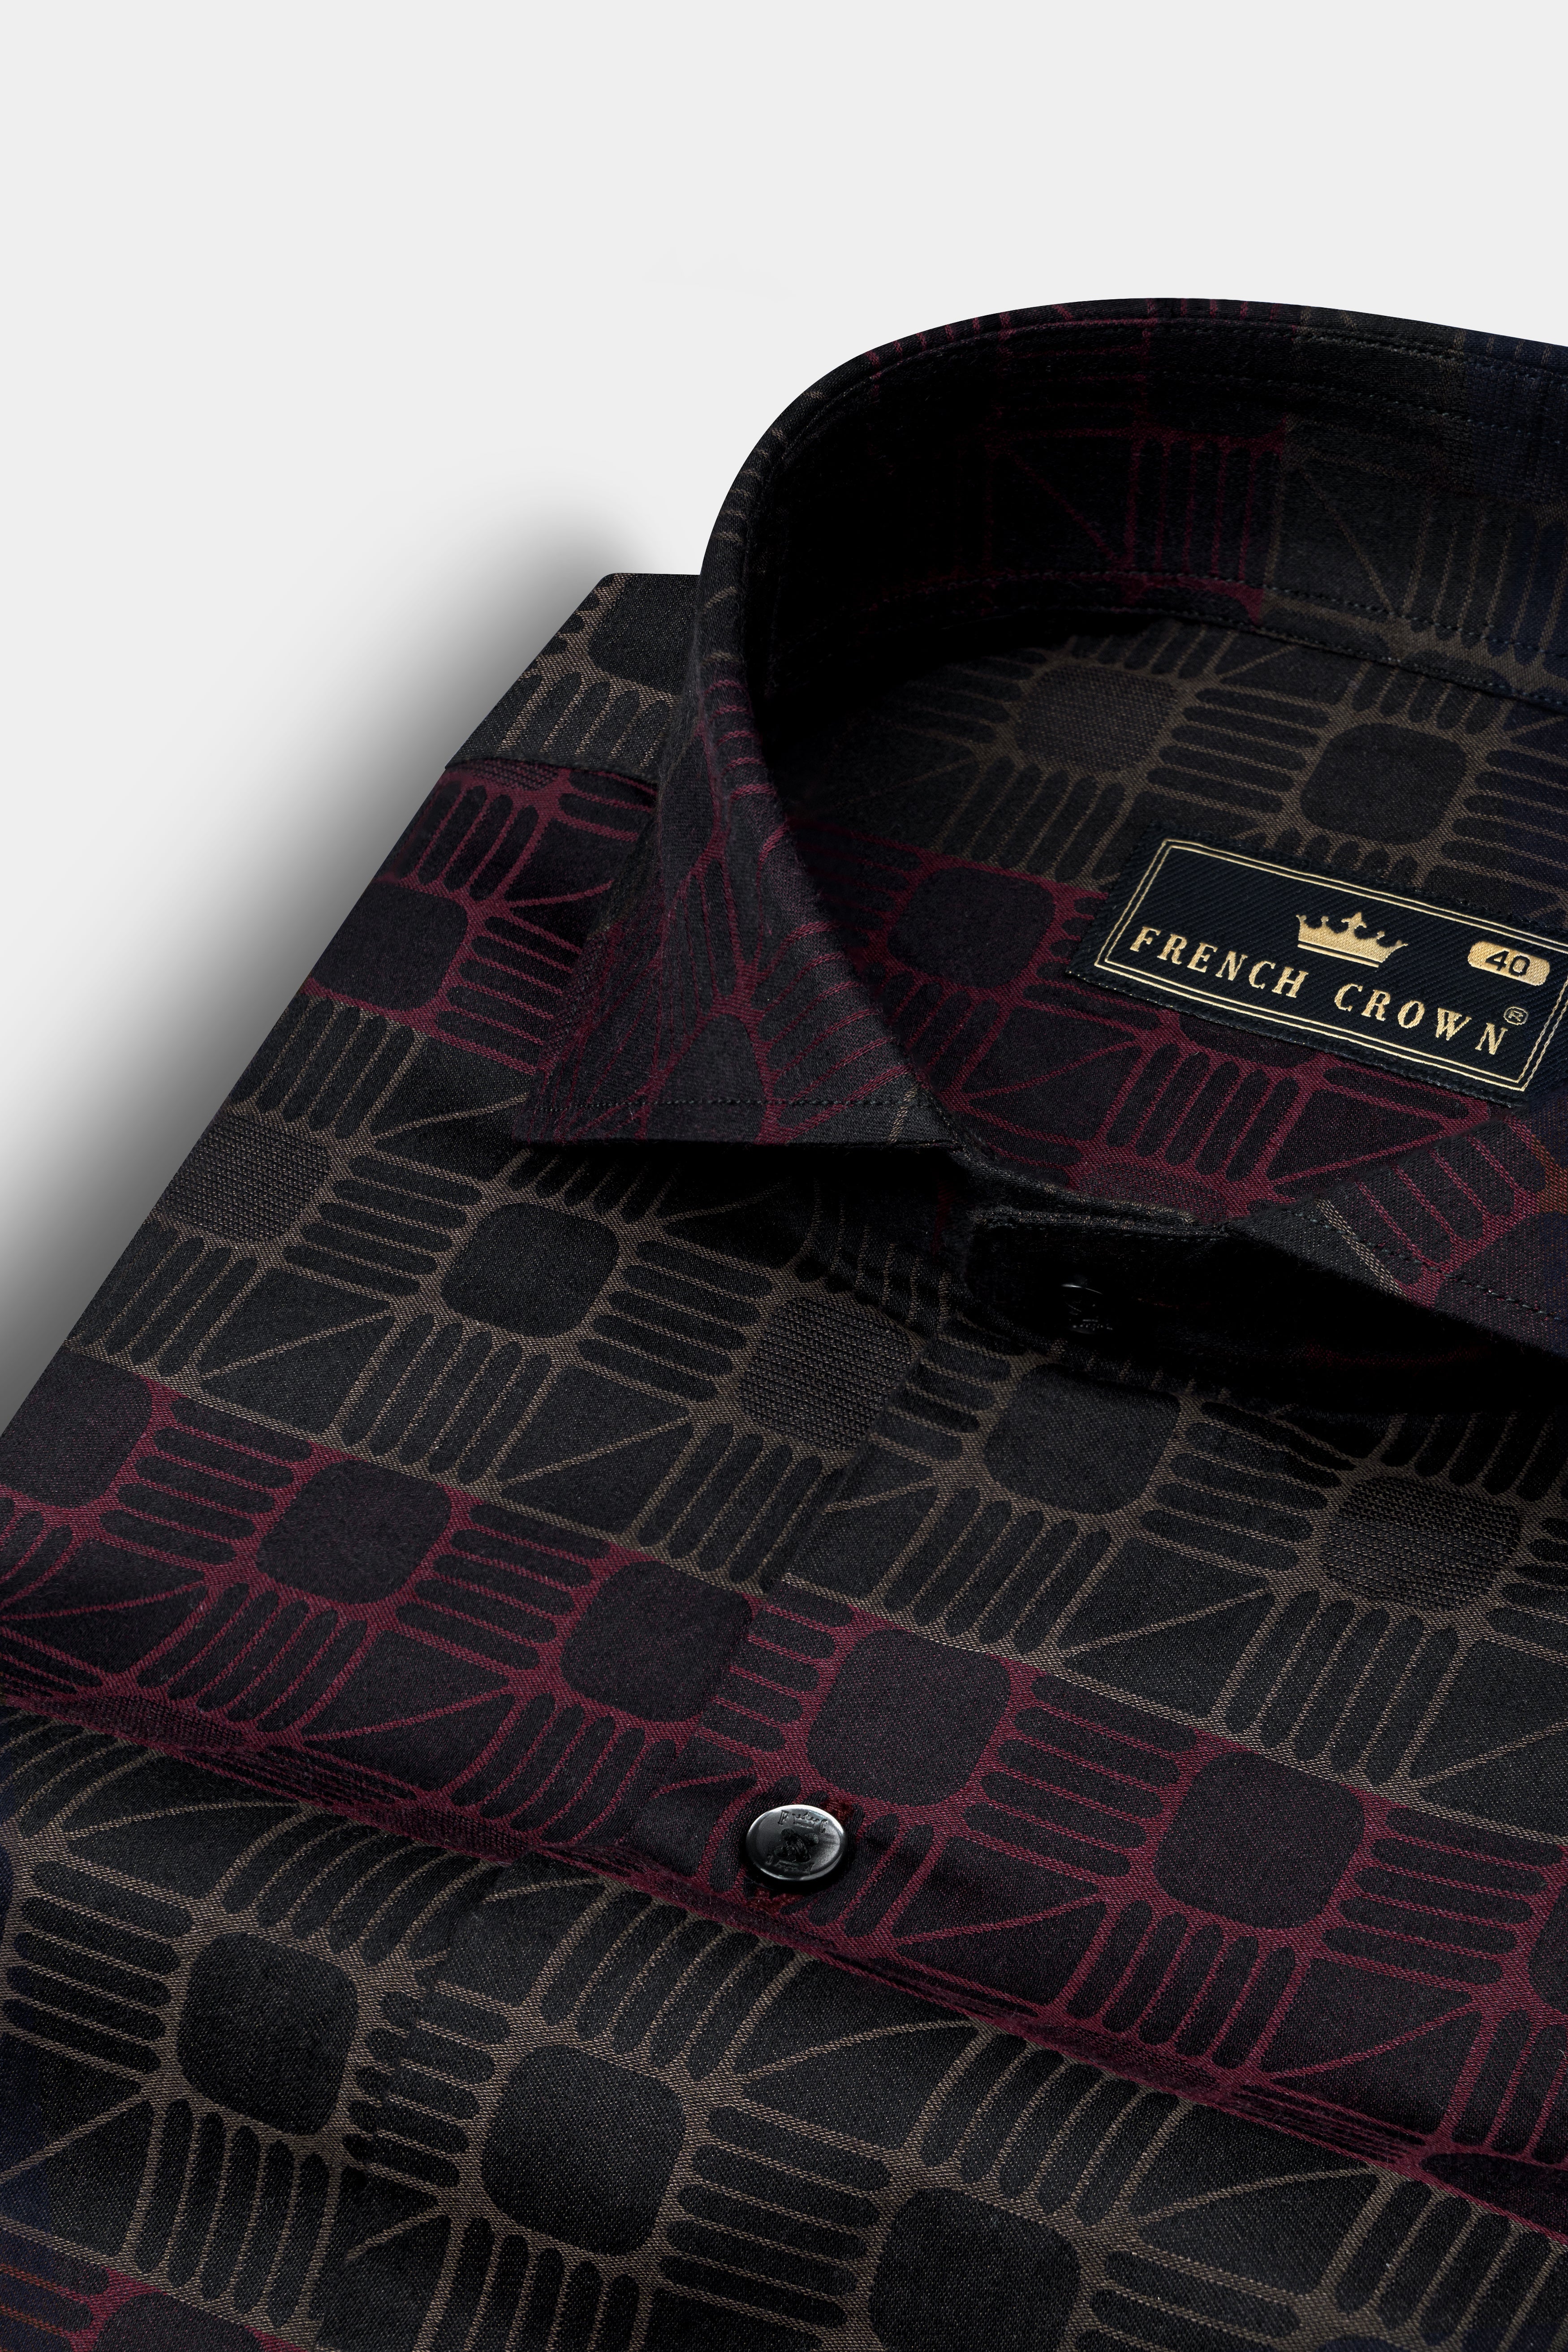 Piano Gray and Wine Berry Jacquard Textured Premium Cotton Shirt